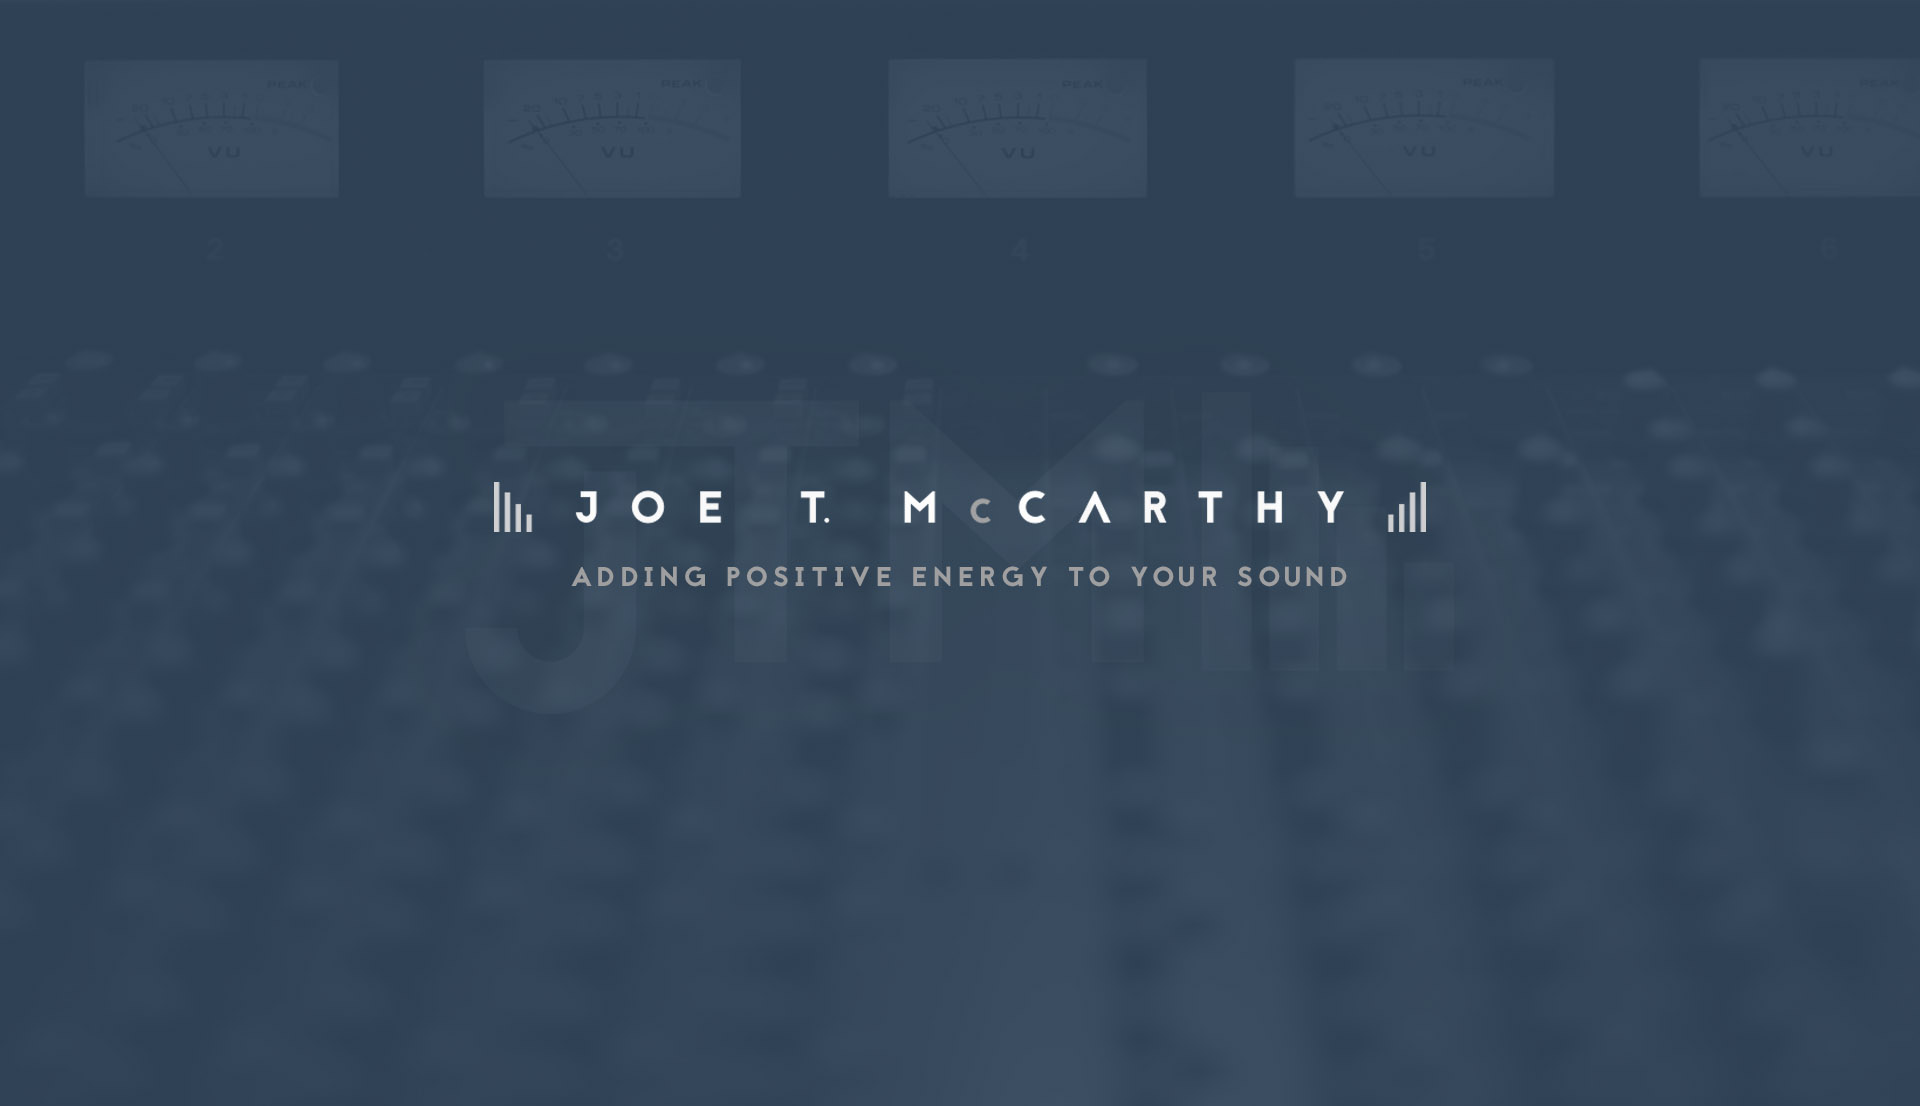 Joe T. McCarthy